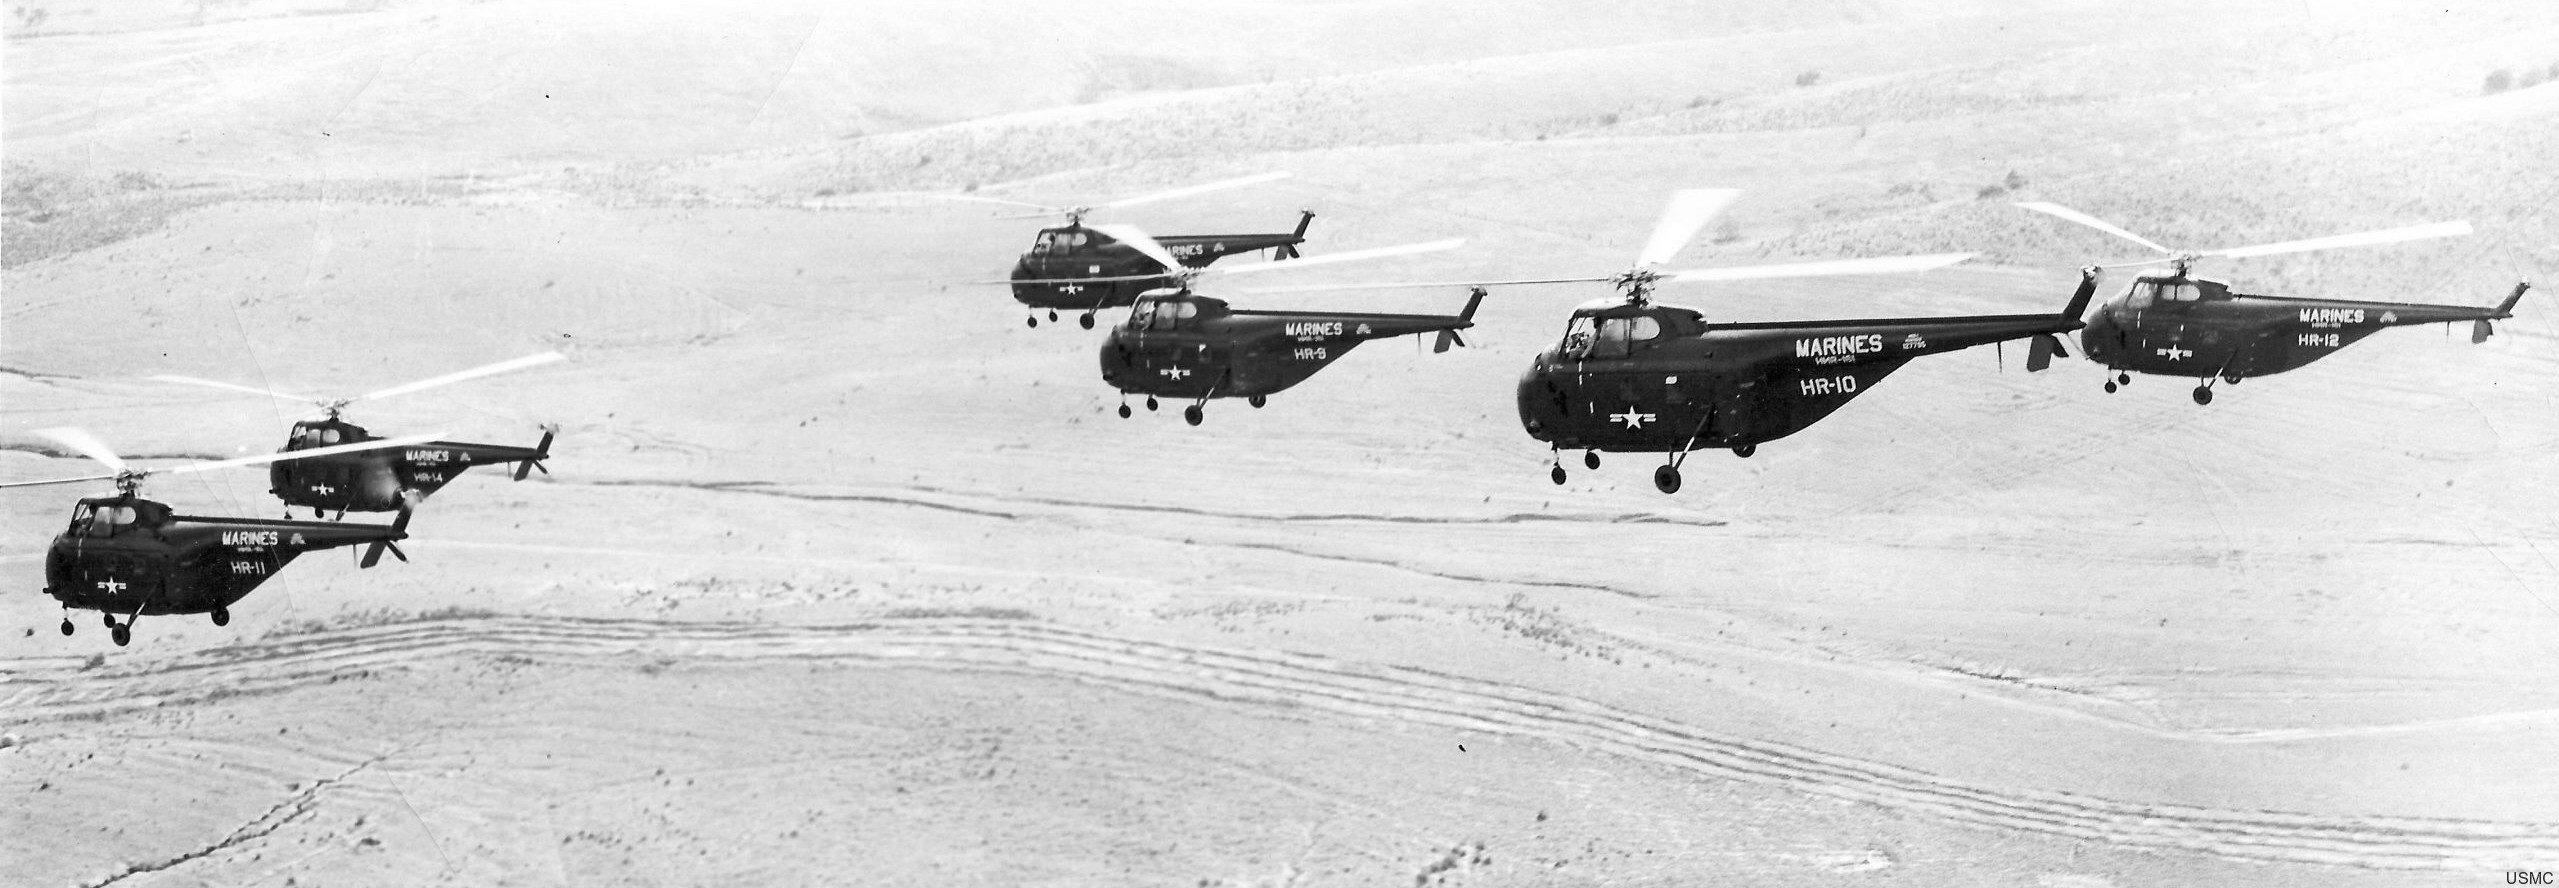 hmr-161 greyhawks marine helicopter transport squadron sikorsky hrs-1 chickasaw usmc 14a camp pendleton california